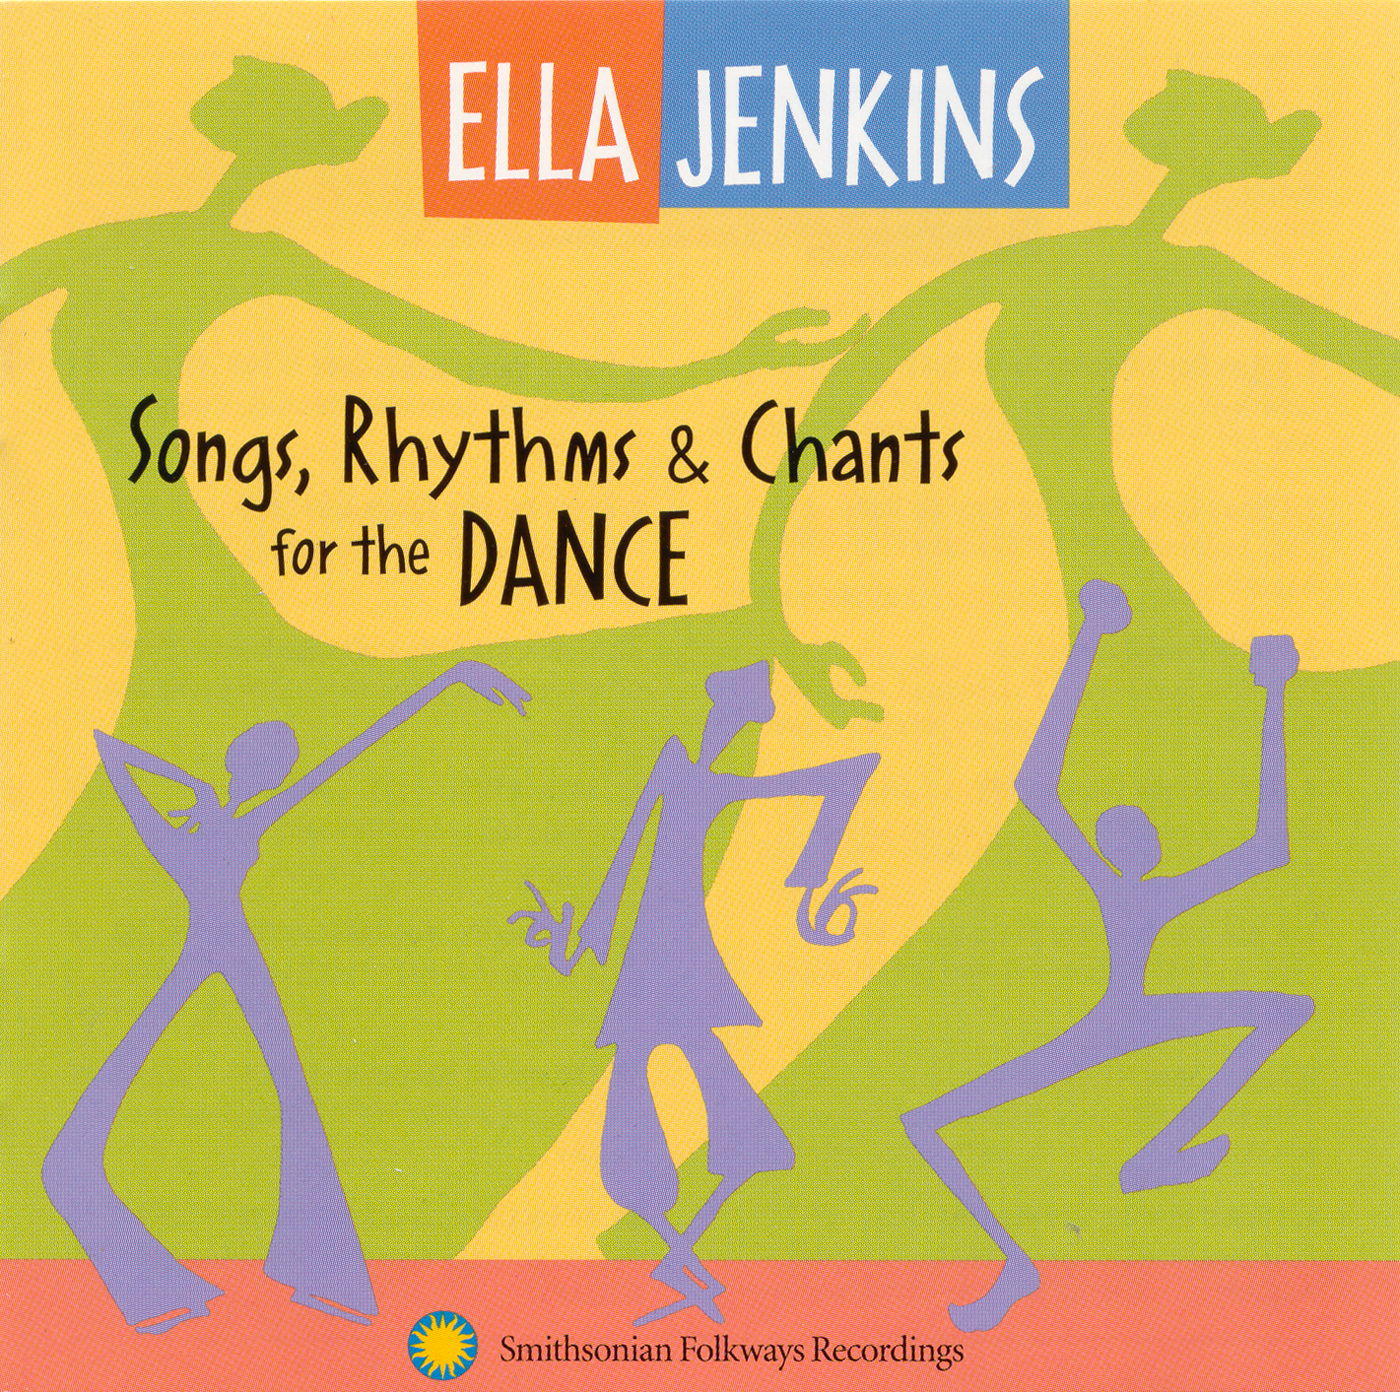 Songs, Rhythms, and Chants for the Dance CD artwork